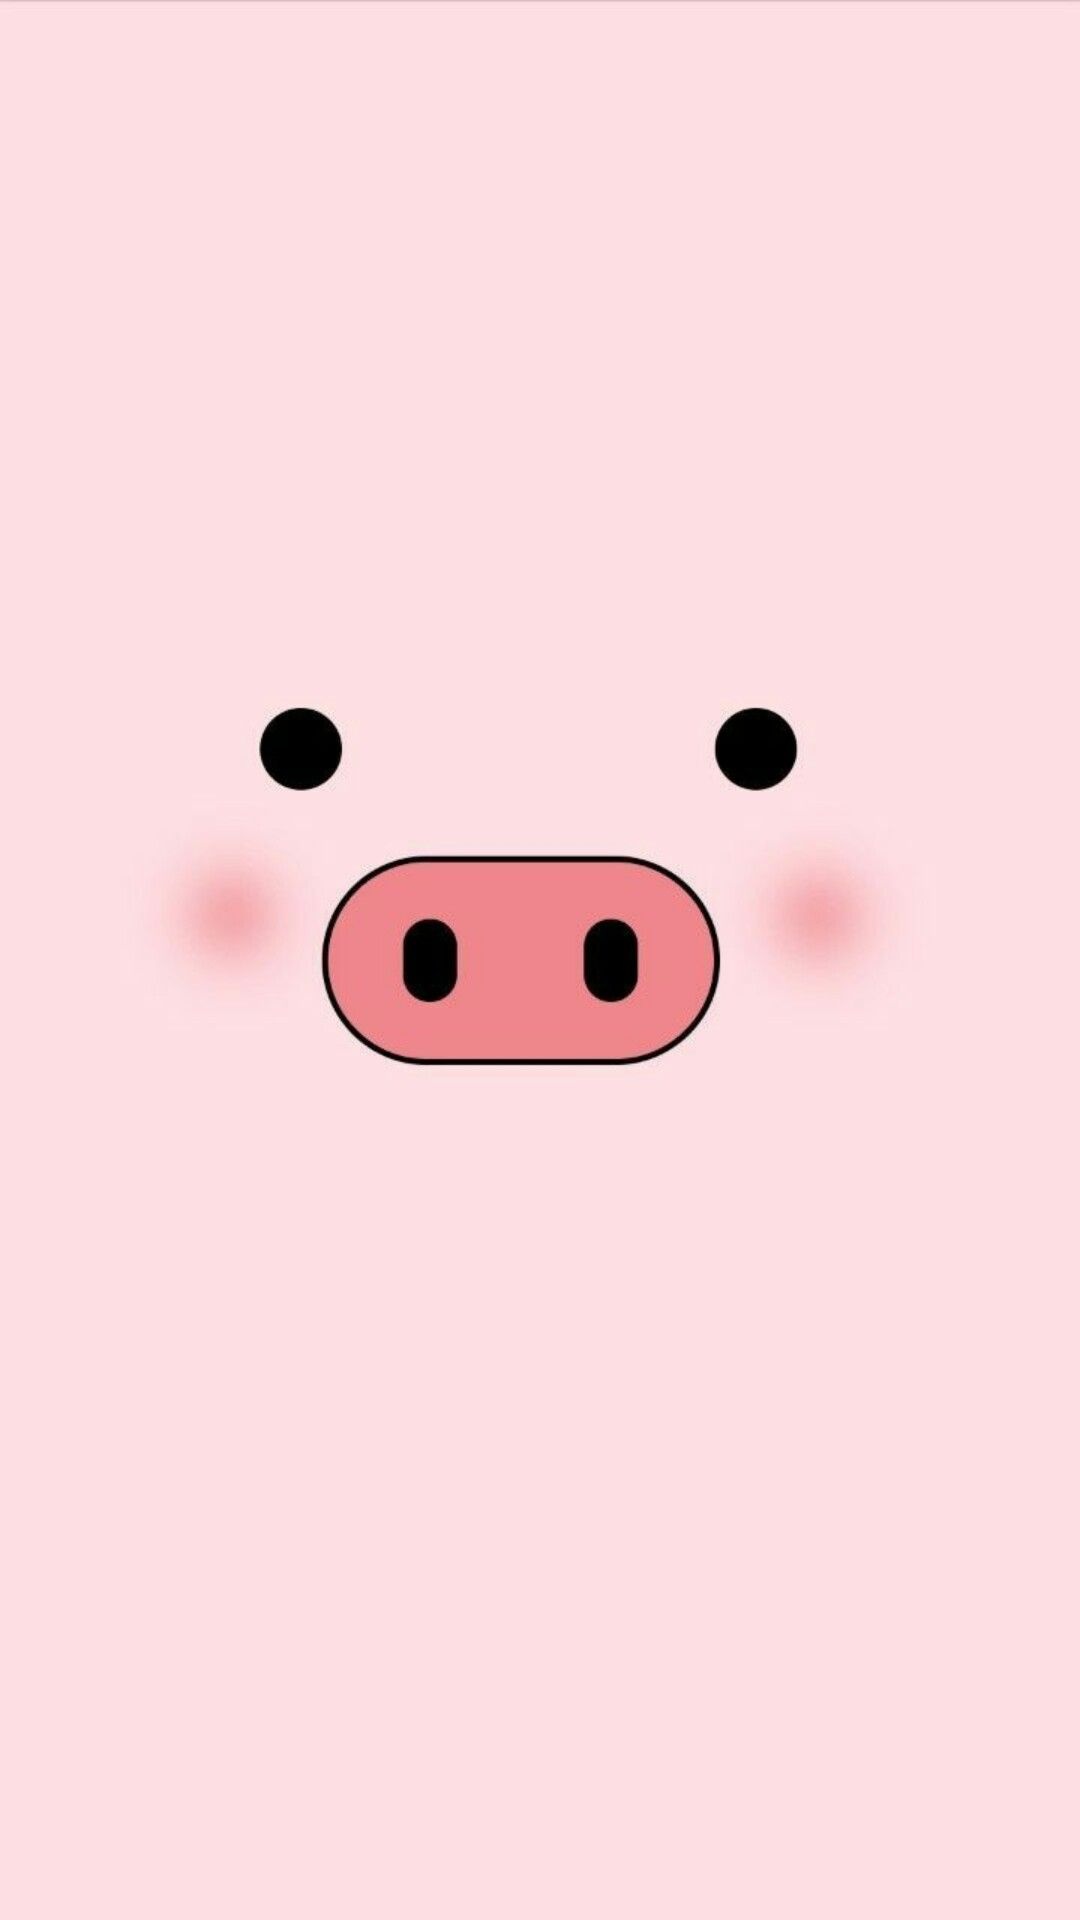 Emotive pig wallpaper, Cute emoji pig, Whimsical backgrounds, Playful snouts, 1080x1920 Full HD Handy